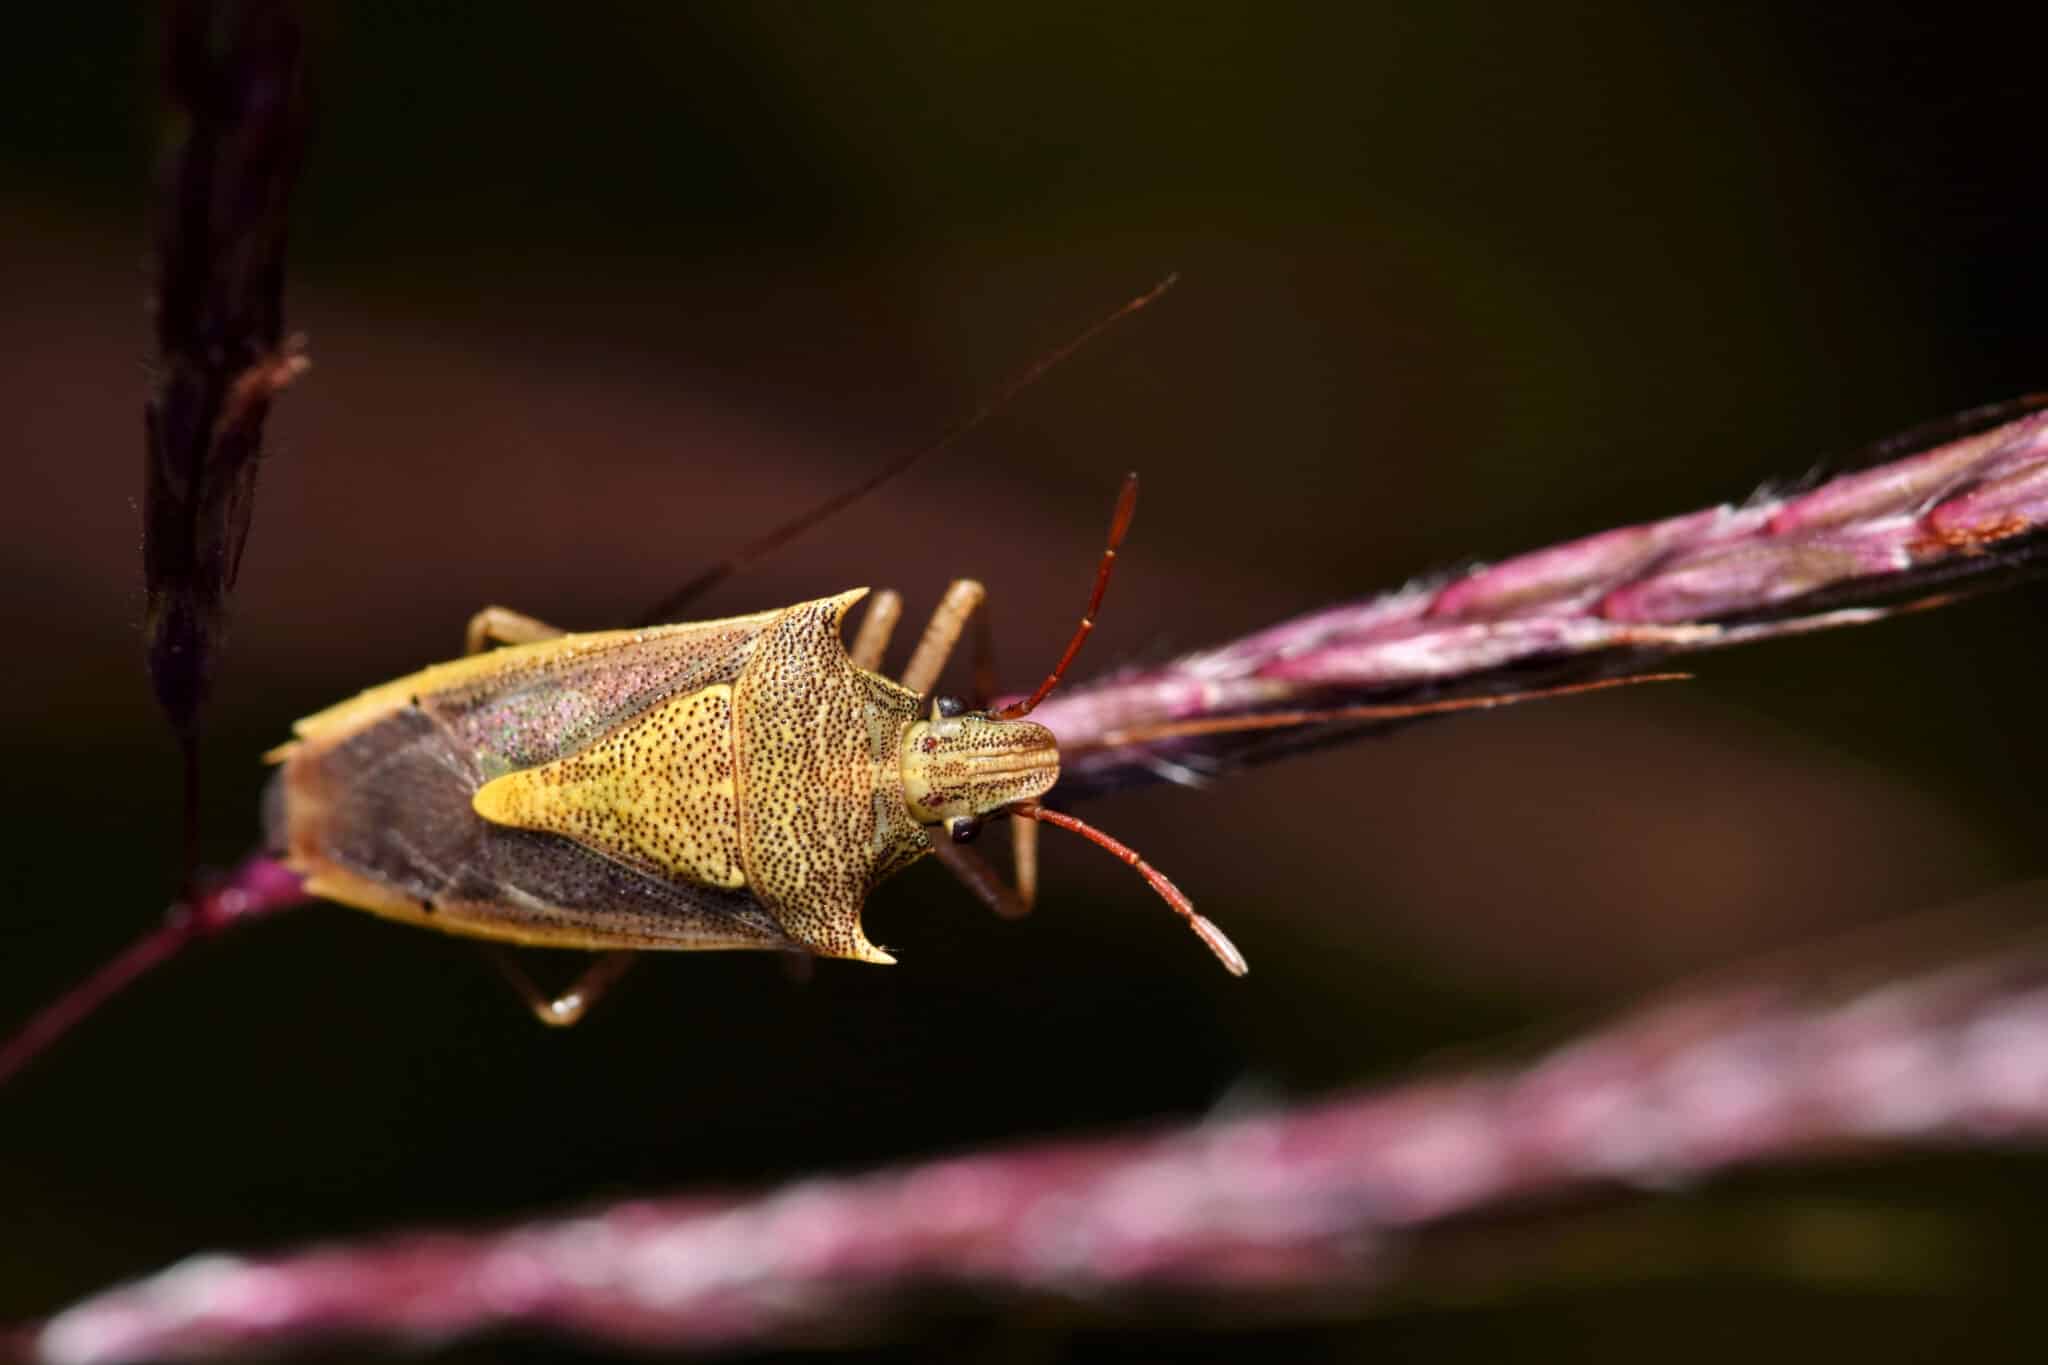 An adult Rice Stink Bug (Oebalus pugnax) on a grass stalk.